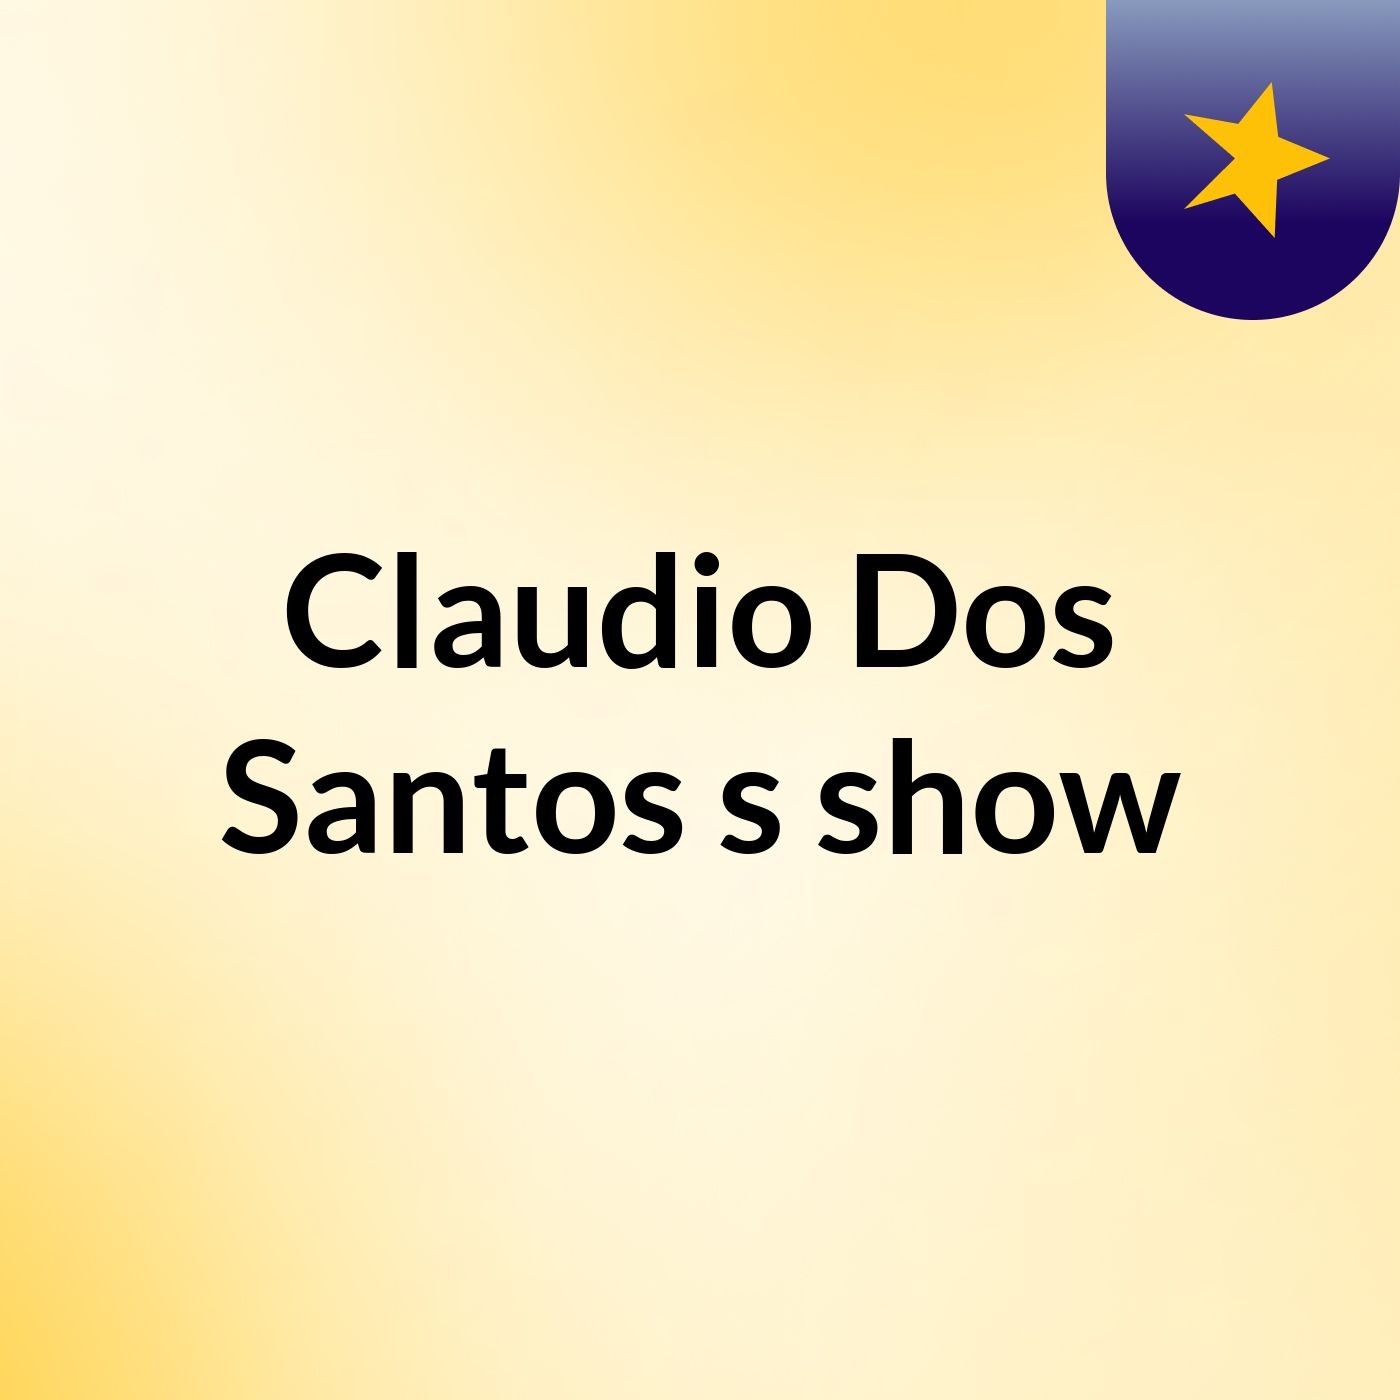 Claudio Dos Santos's show